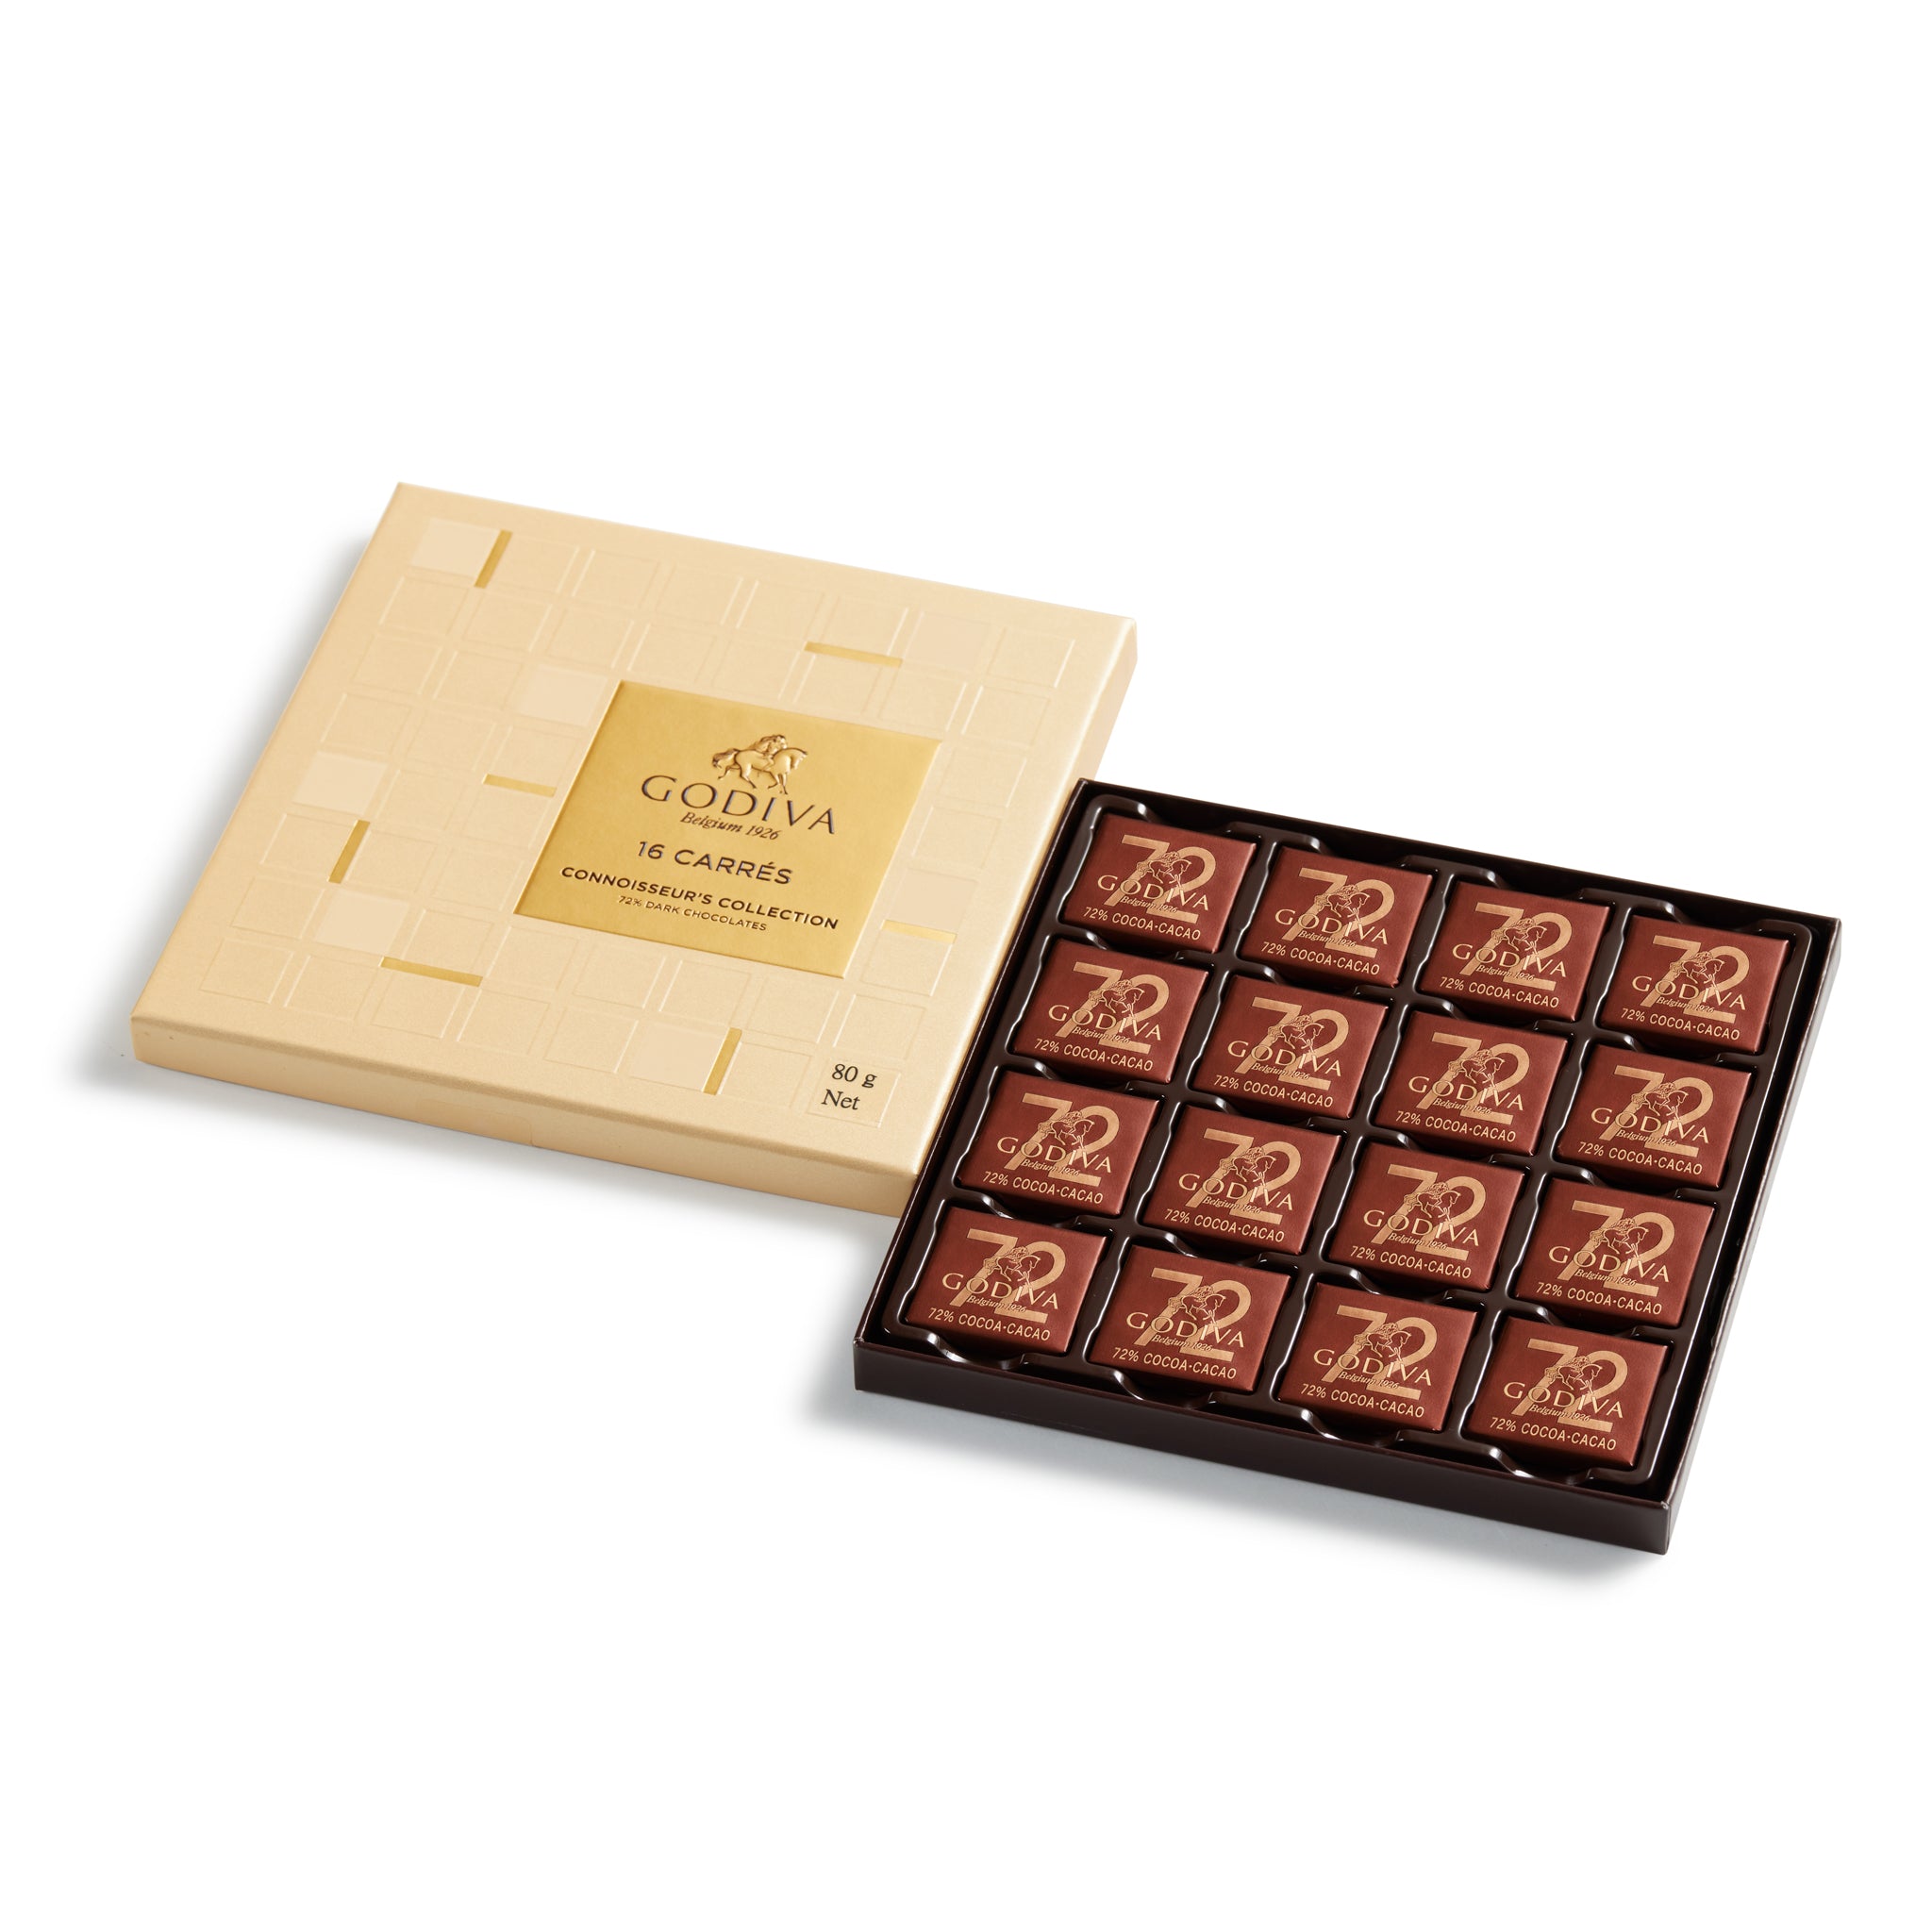 Carrés 72% Dark Chocolate Gift Box, 16 Pieces | 80g